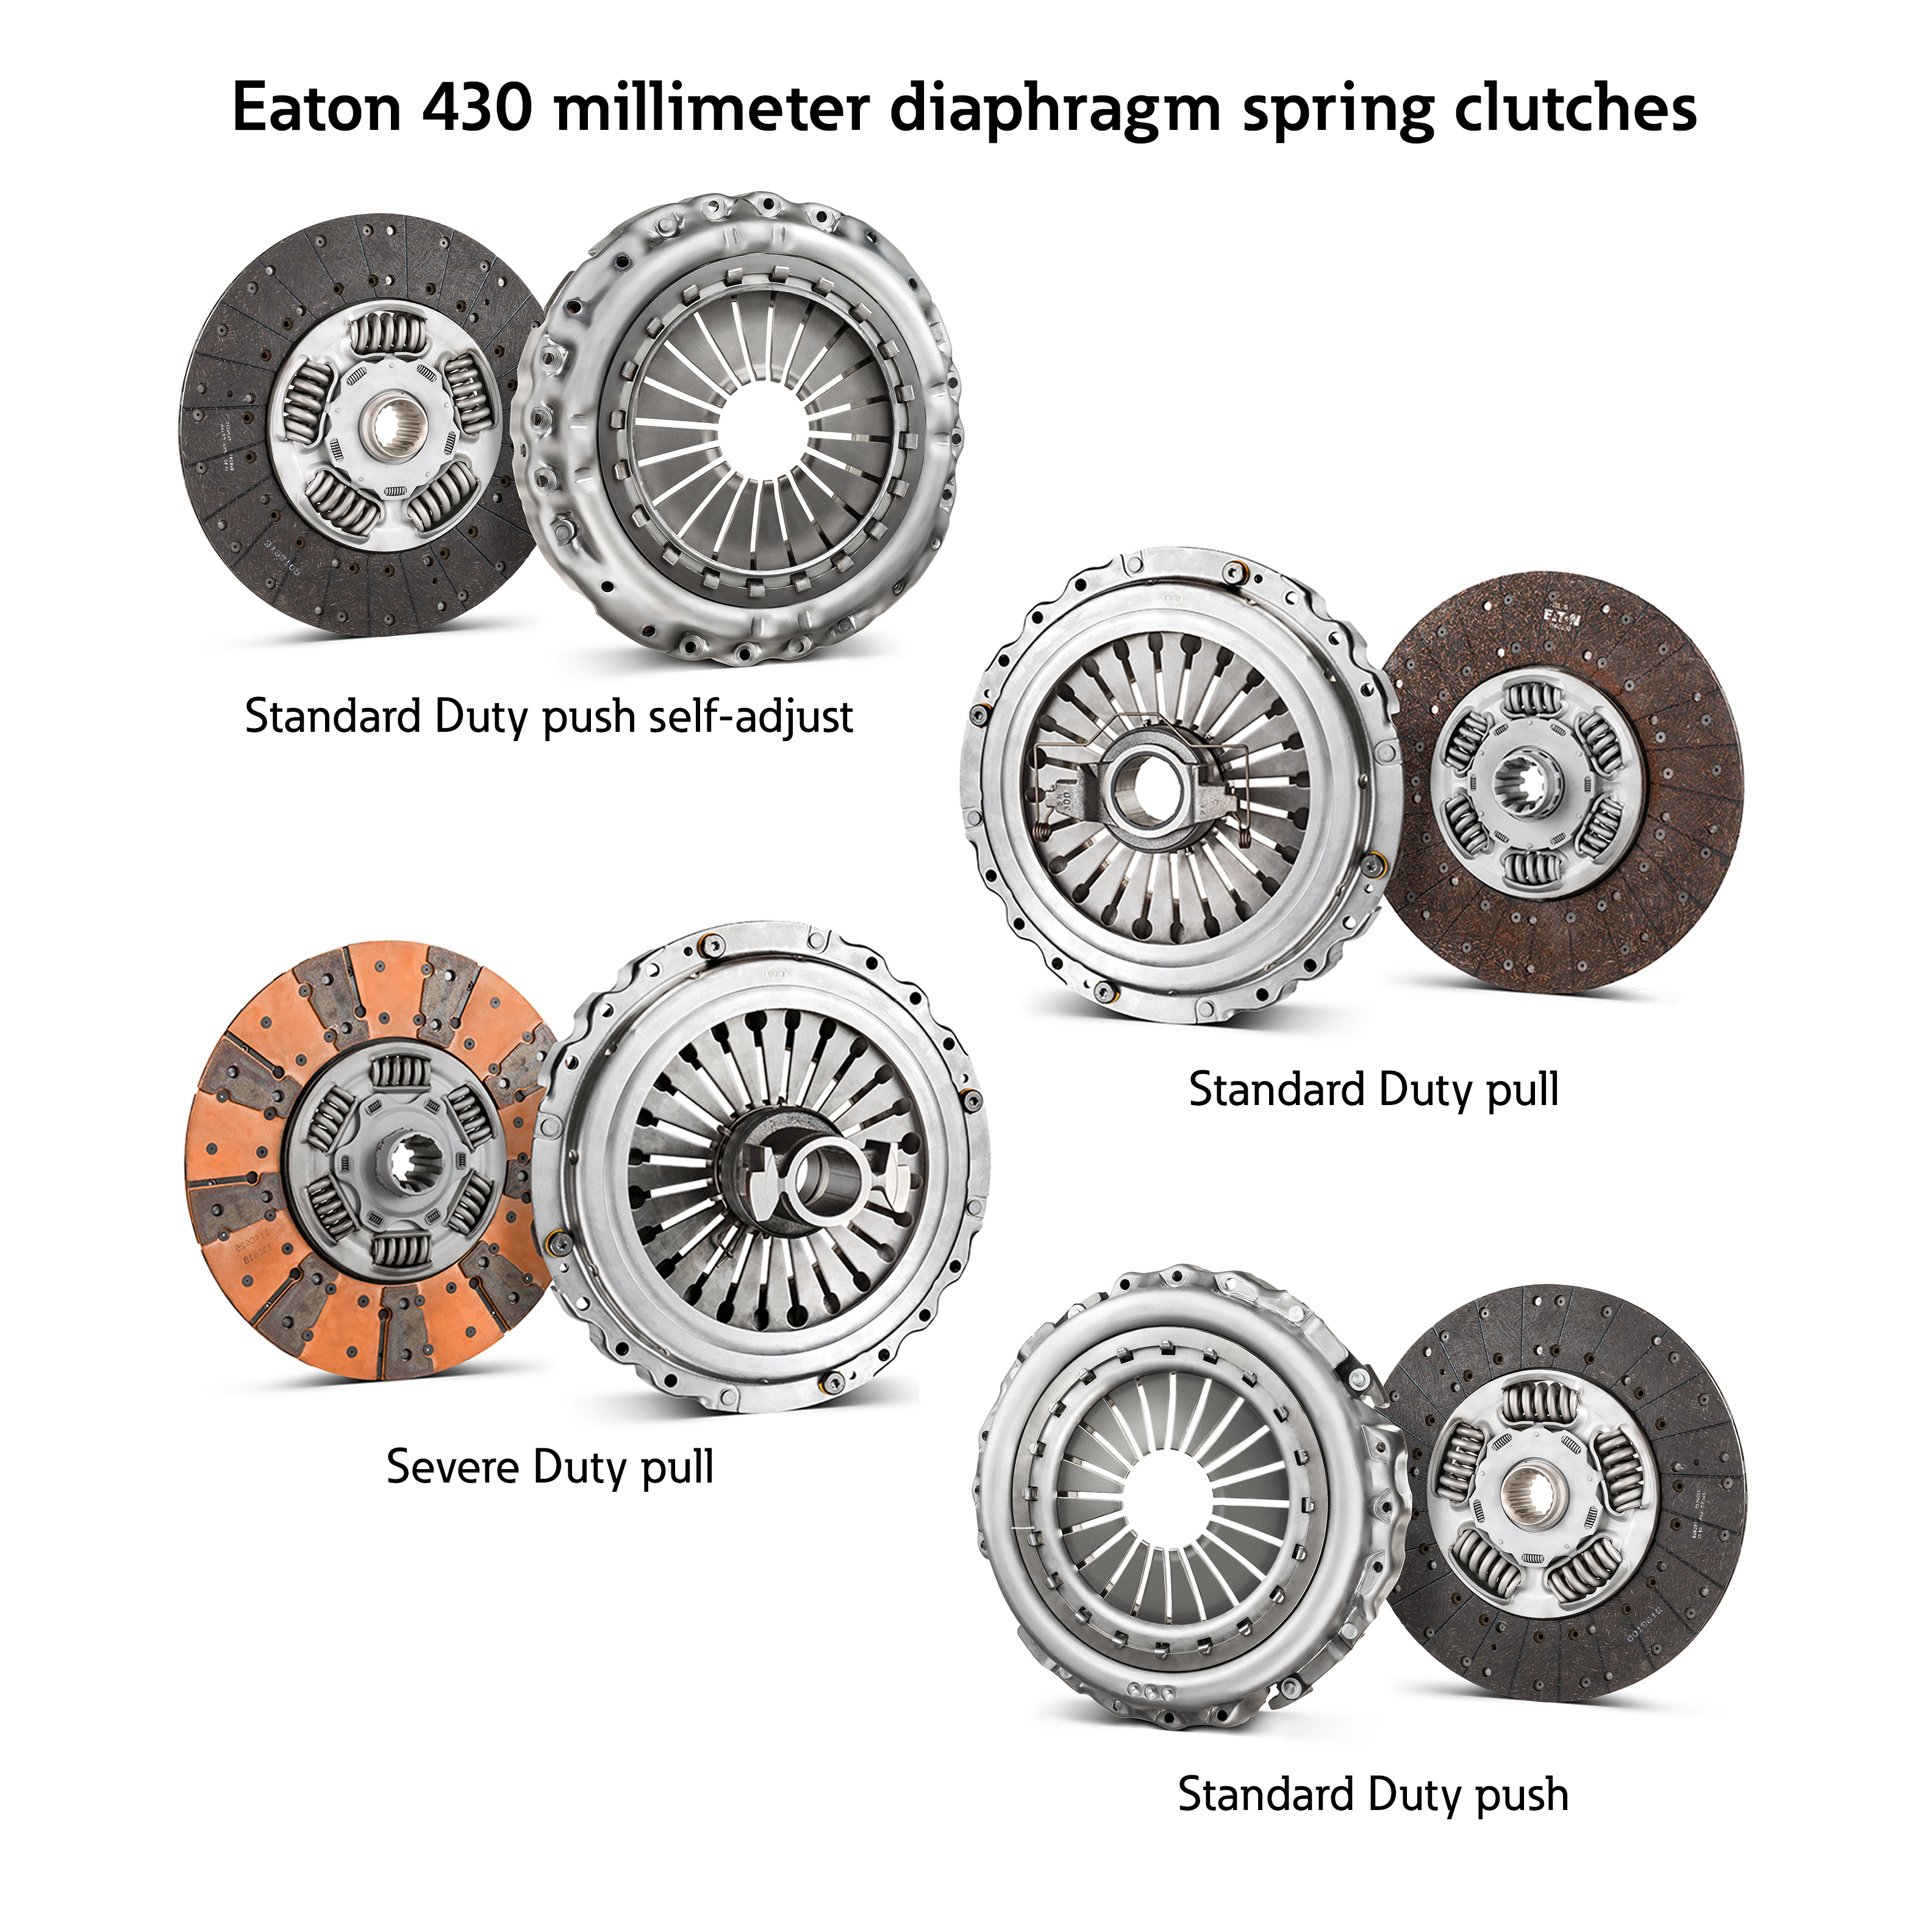 Eaton's Vehicle Group Extends Diaphragm Spring Clutch Portfolio to Optimize  Performance Across the Application Spectrum